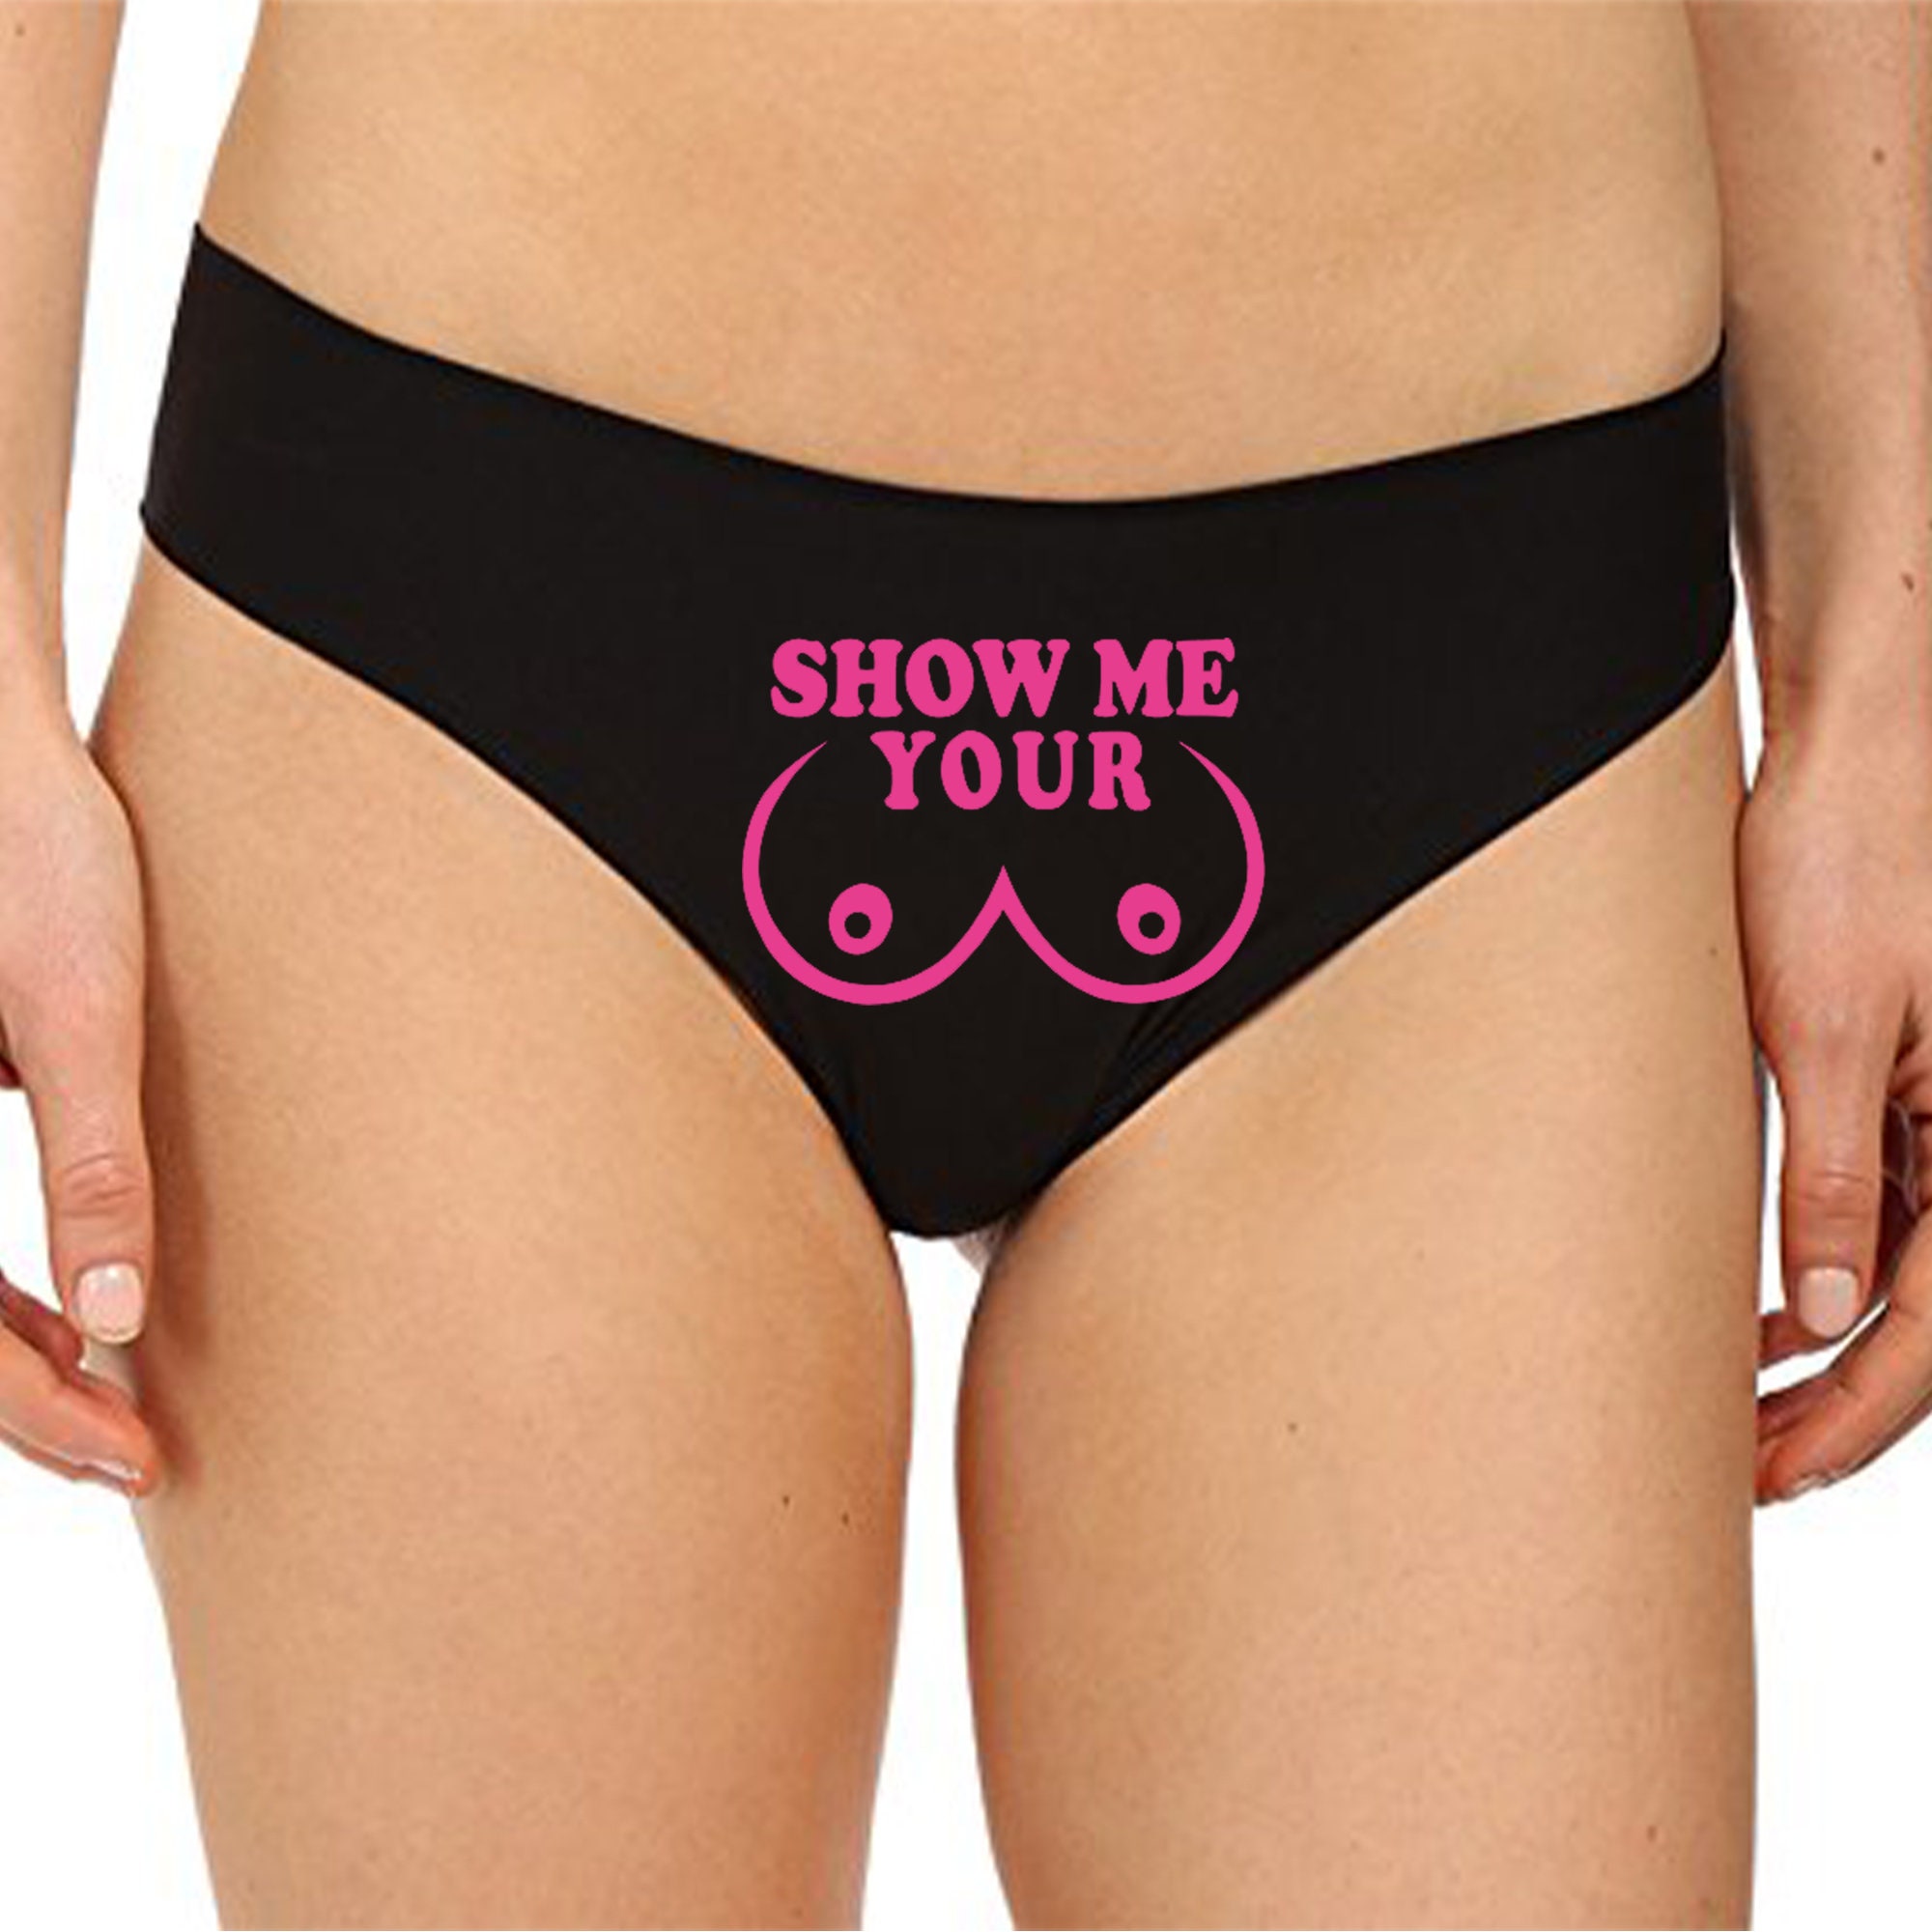 Show Me Your Boobs Panties Sexy Christmas Gift Funny Naughty